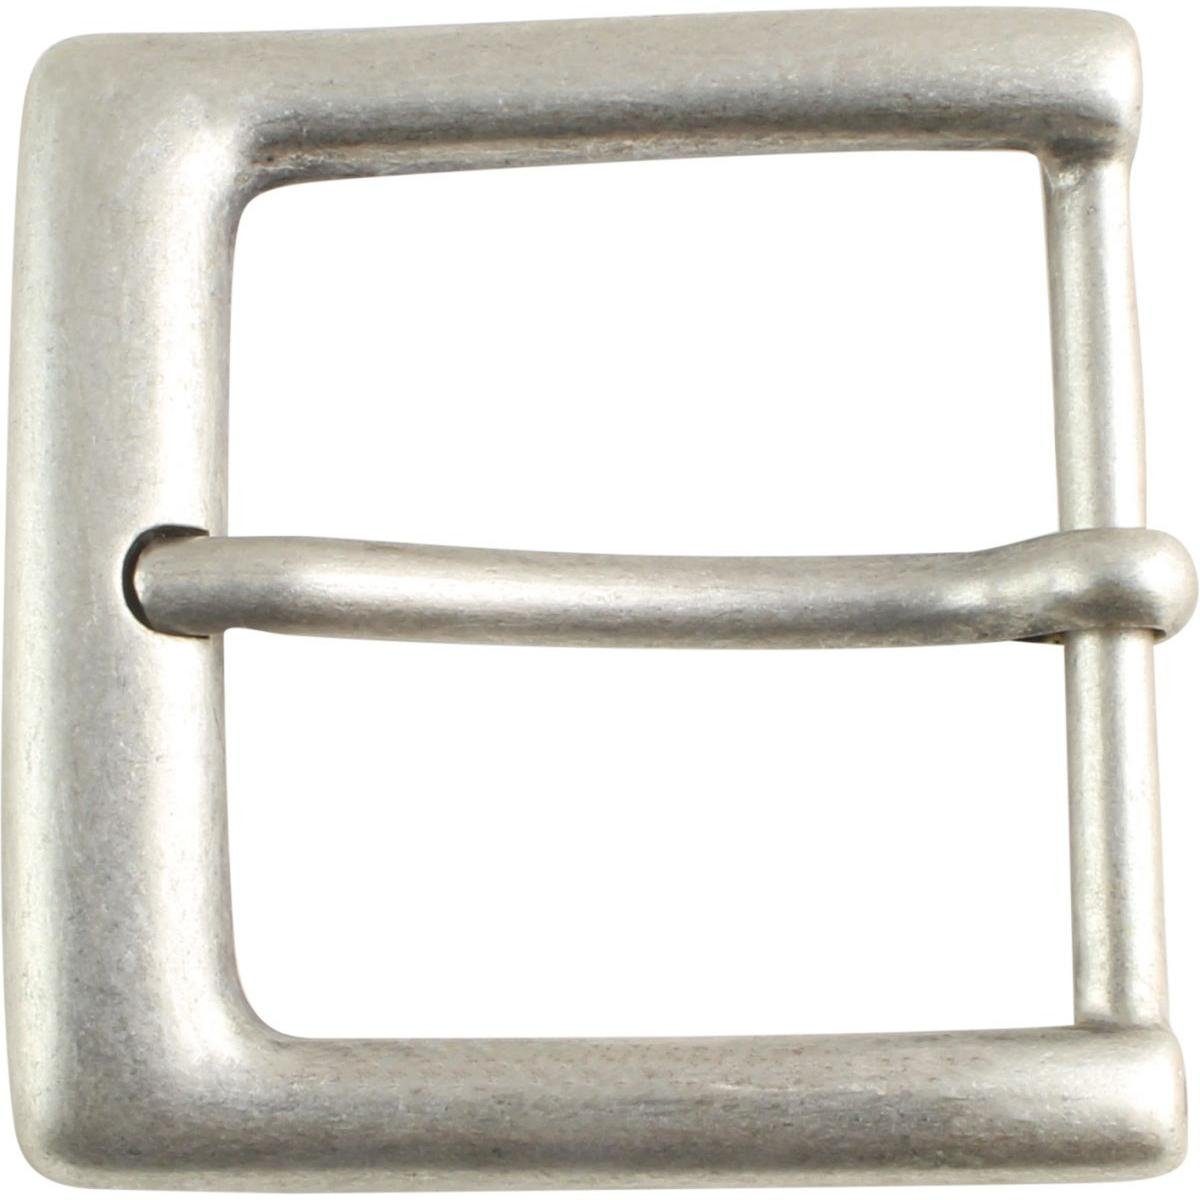 BELTINGER Gürtelschnalle 3,0 cm - Wechselschließe Gürtelschließe 30mm - Dorn-Schließe - Gürtel